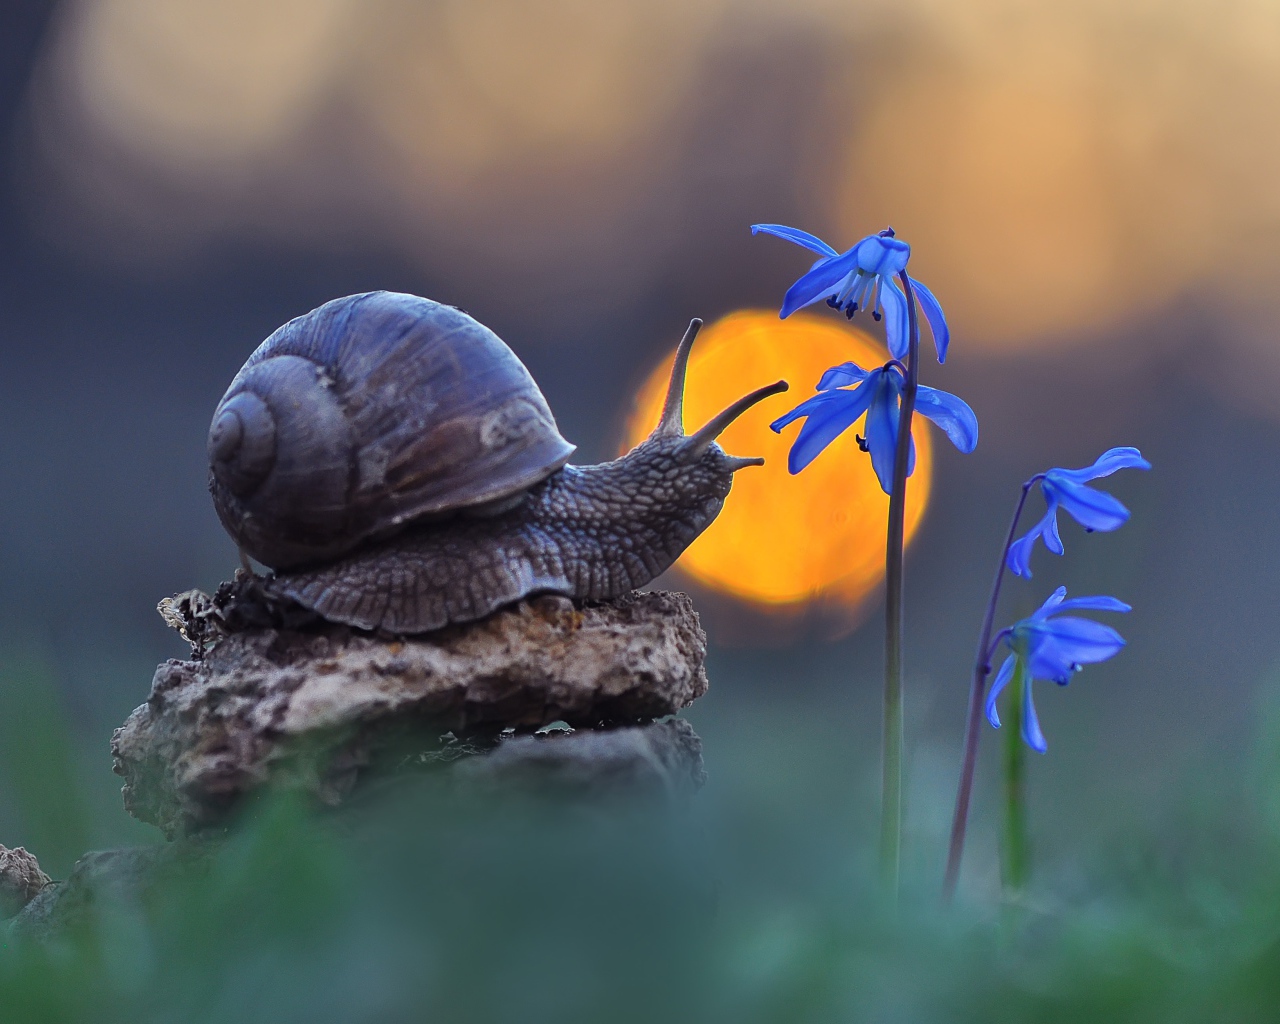 Snail sits on a stone near a blue flower